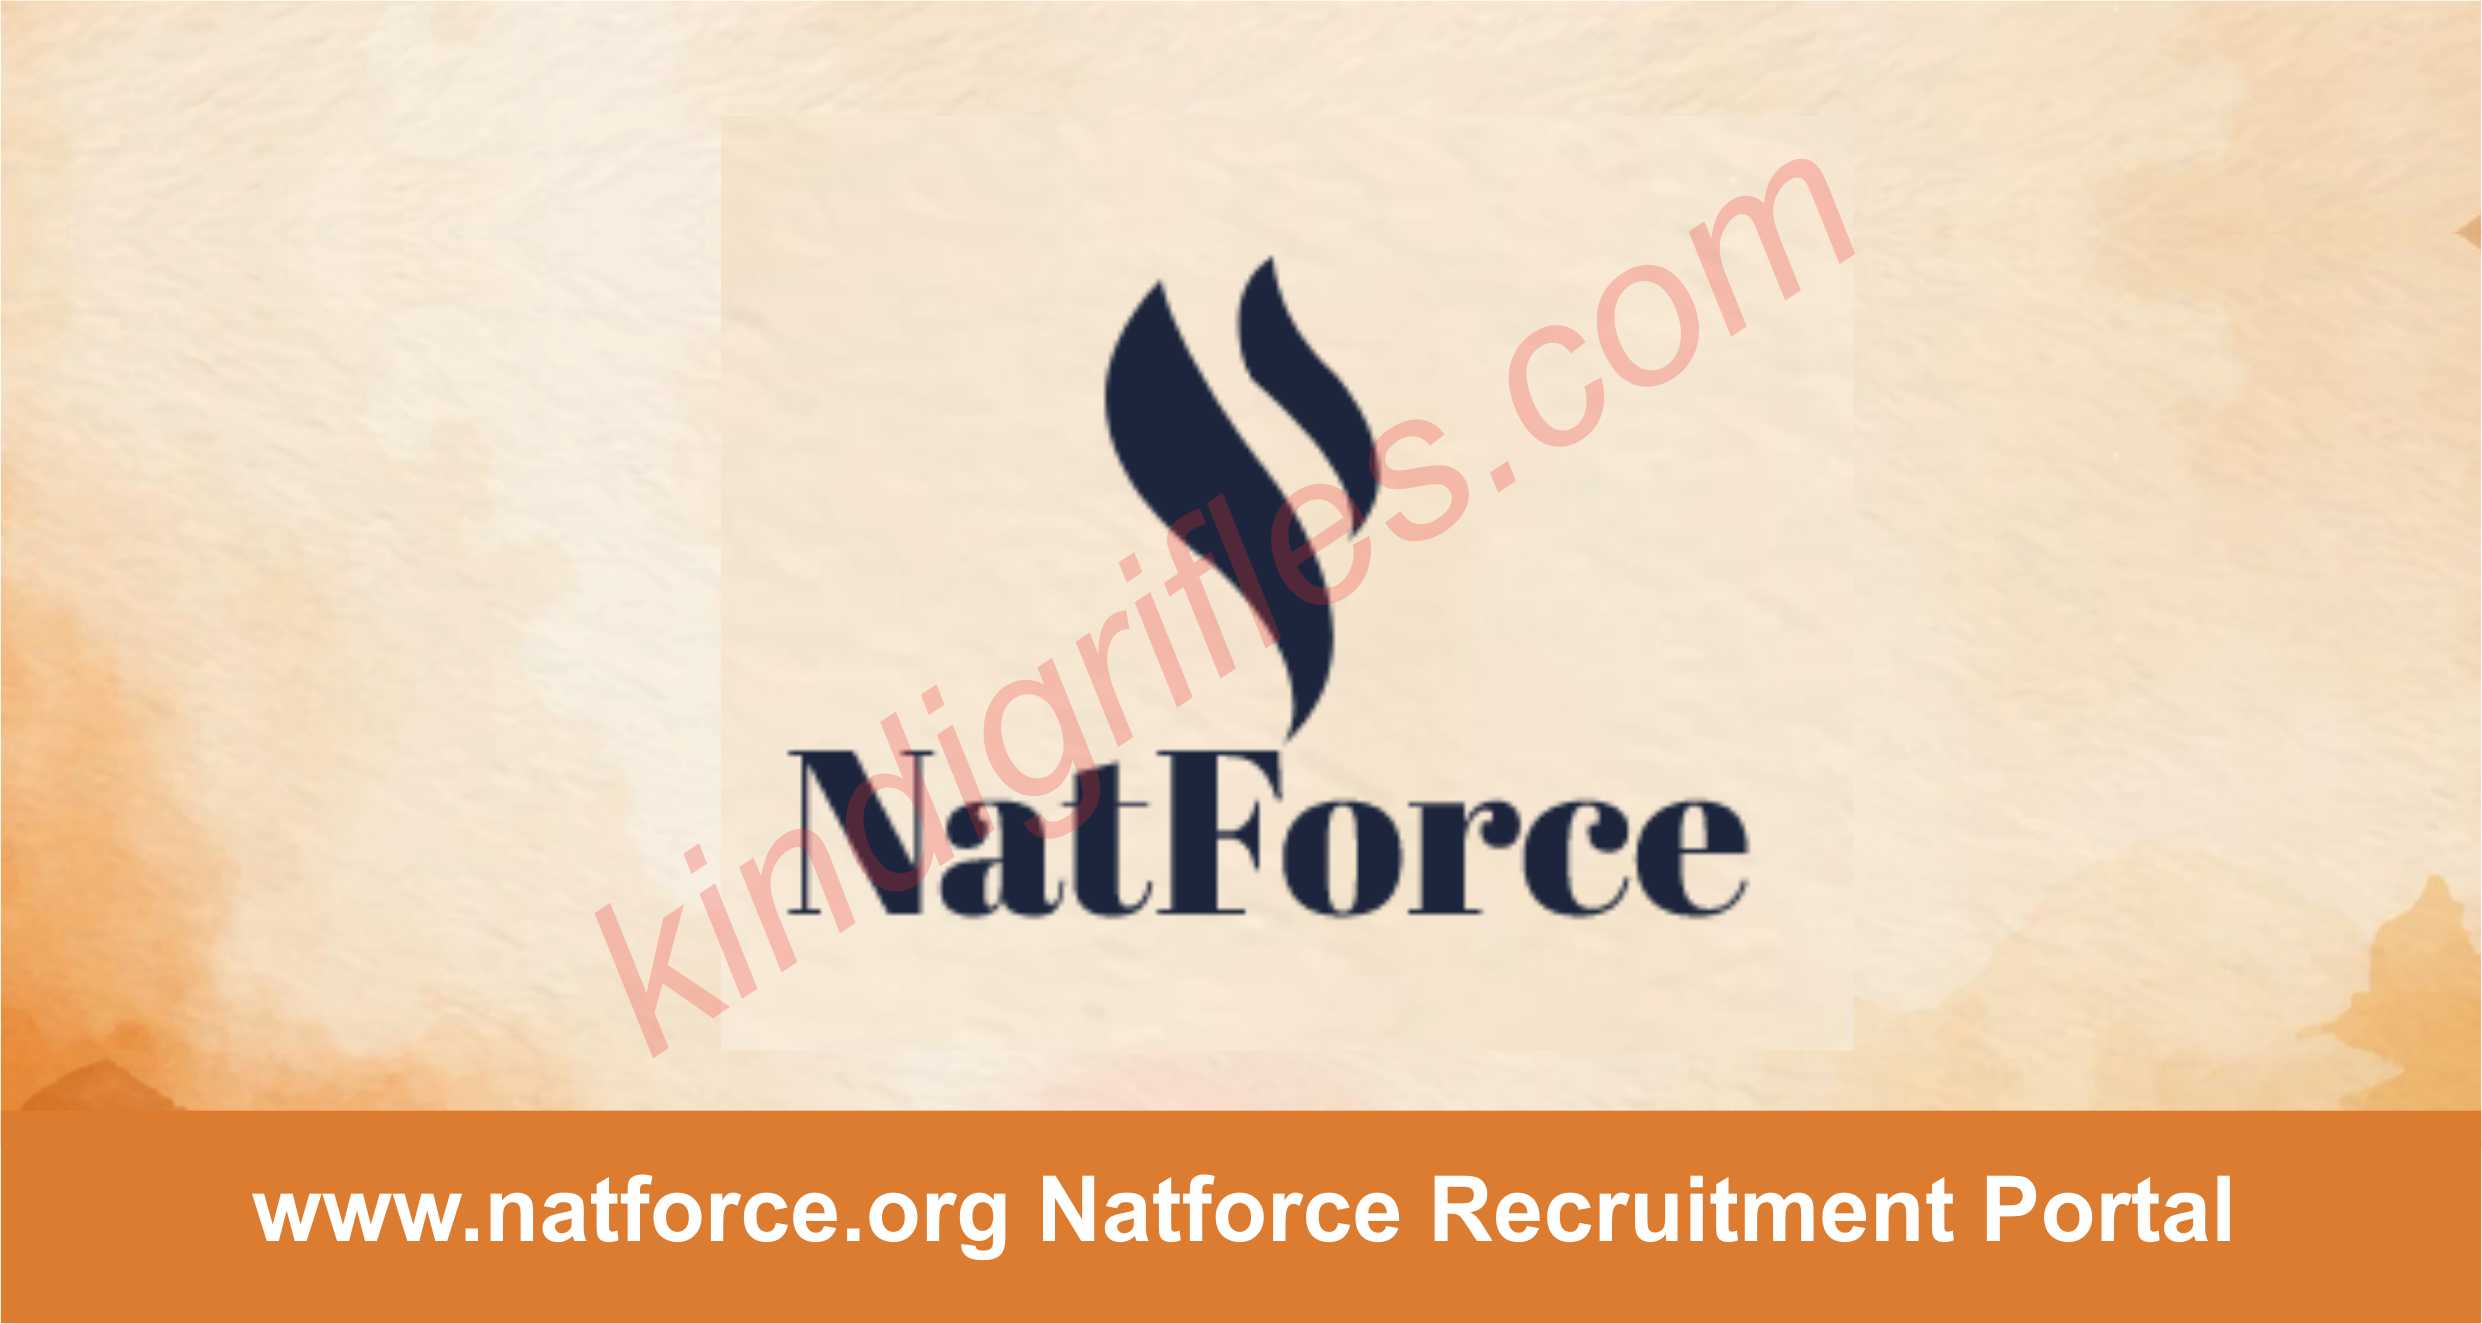 www.natforce.org Natforce Recruitment Portal